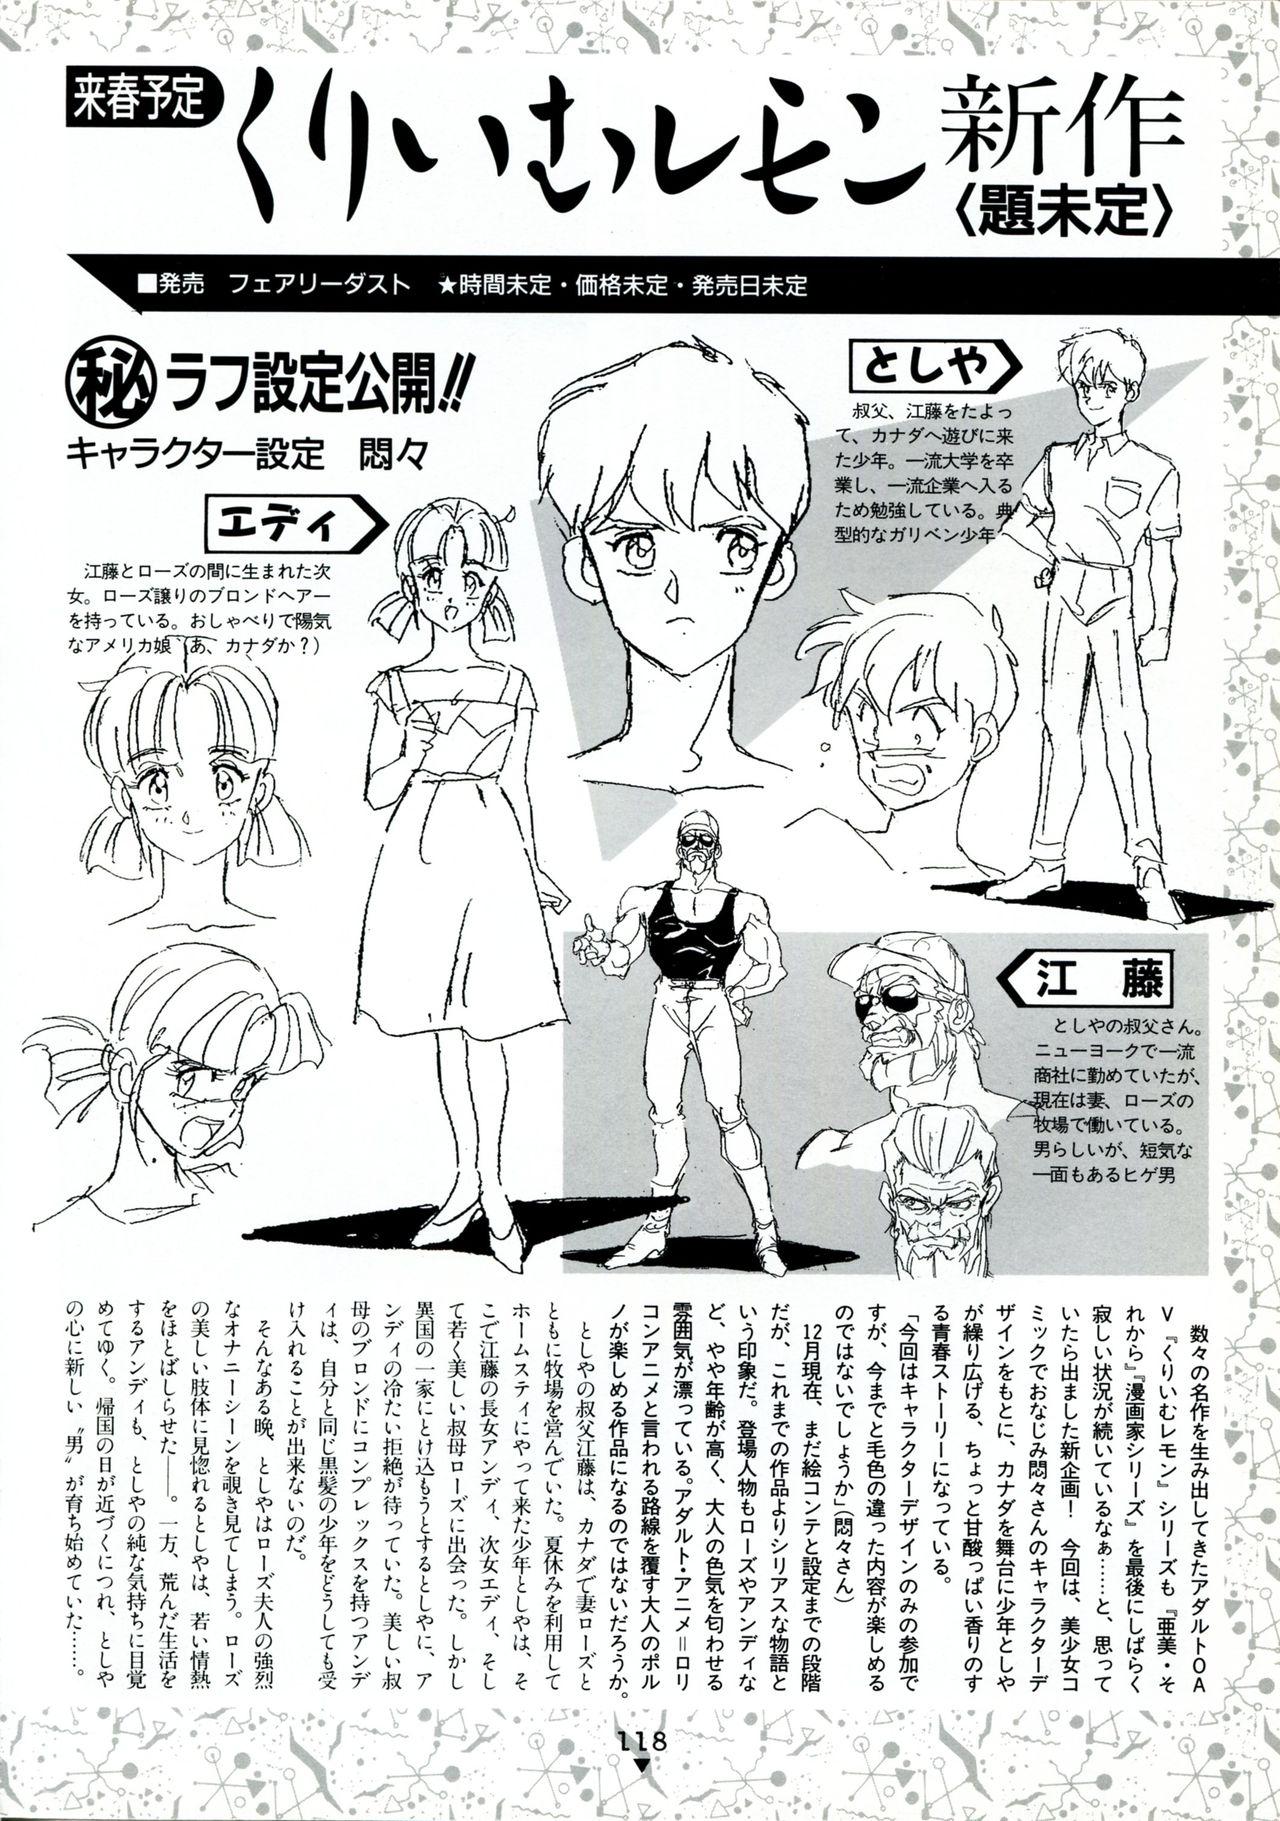 Bishoujo Anime Daizenshuu - Adult Animation Video Catalog 1991 113